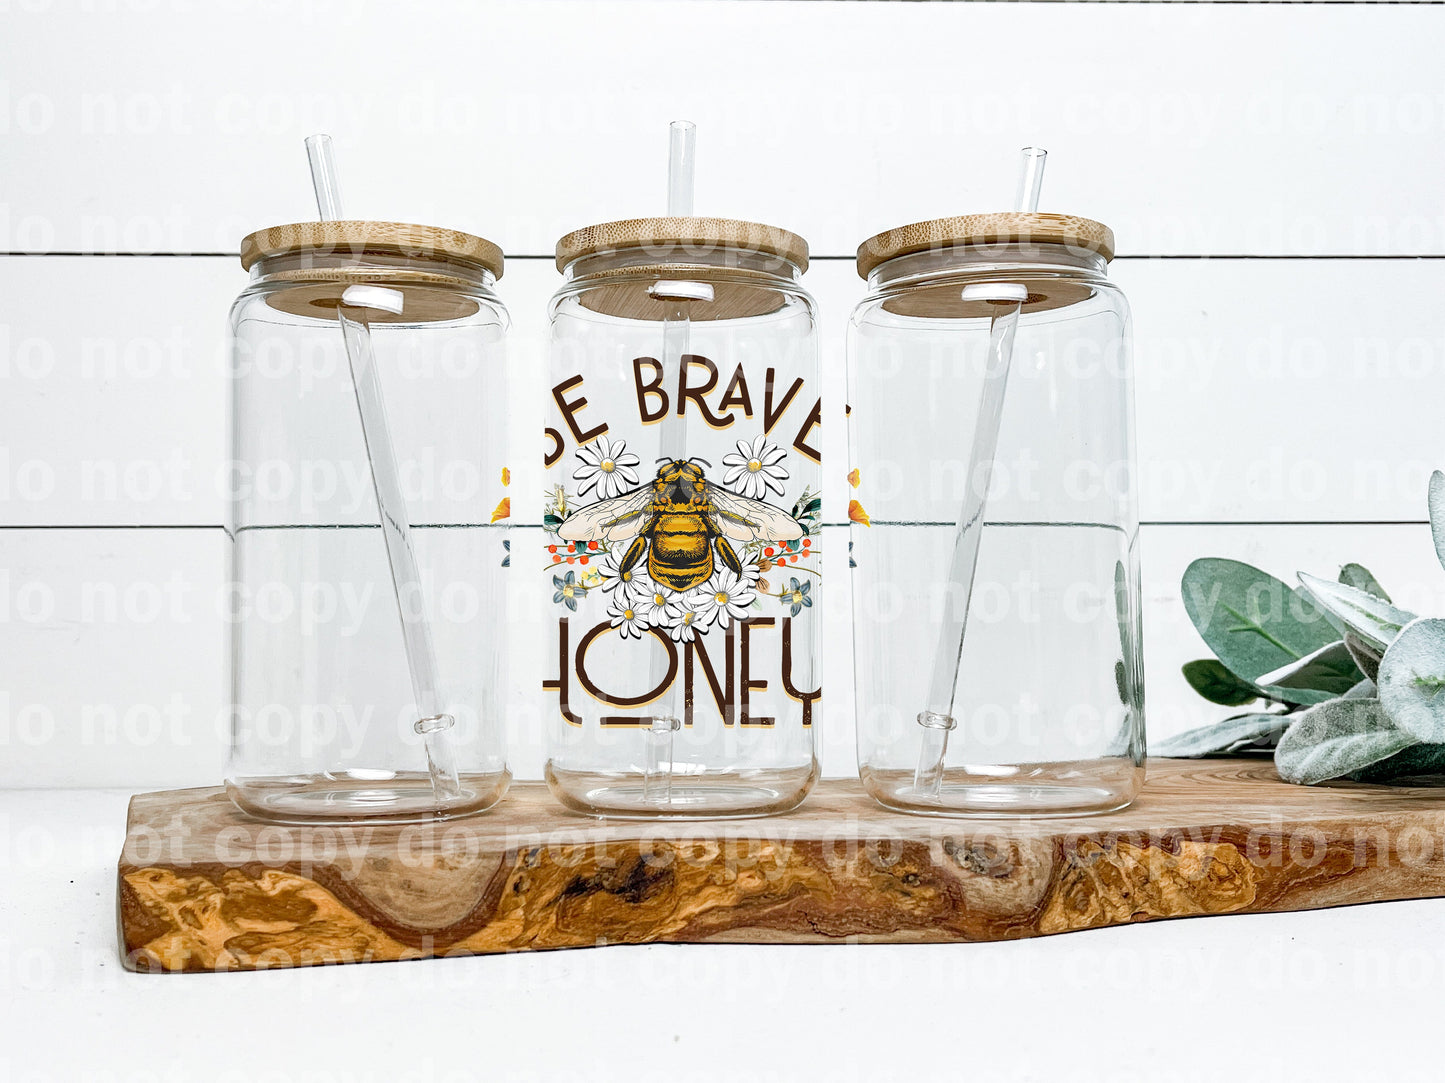 Be Brave Honey Decal 3.6 x 3.5